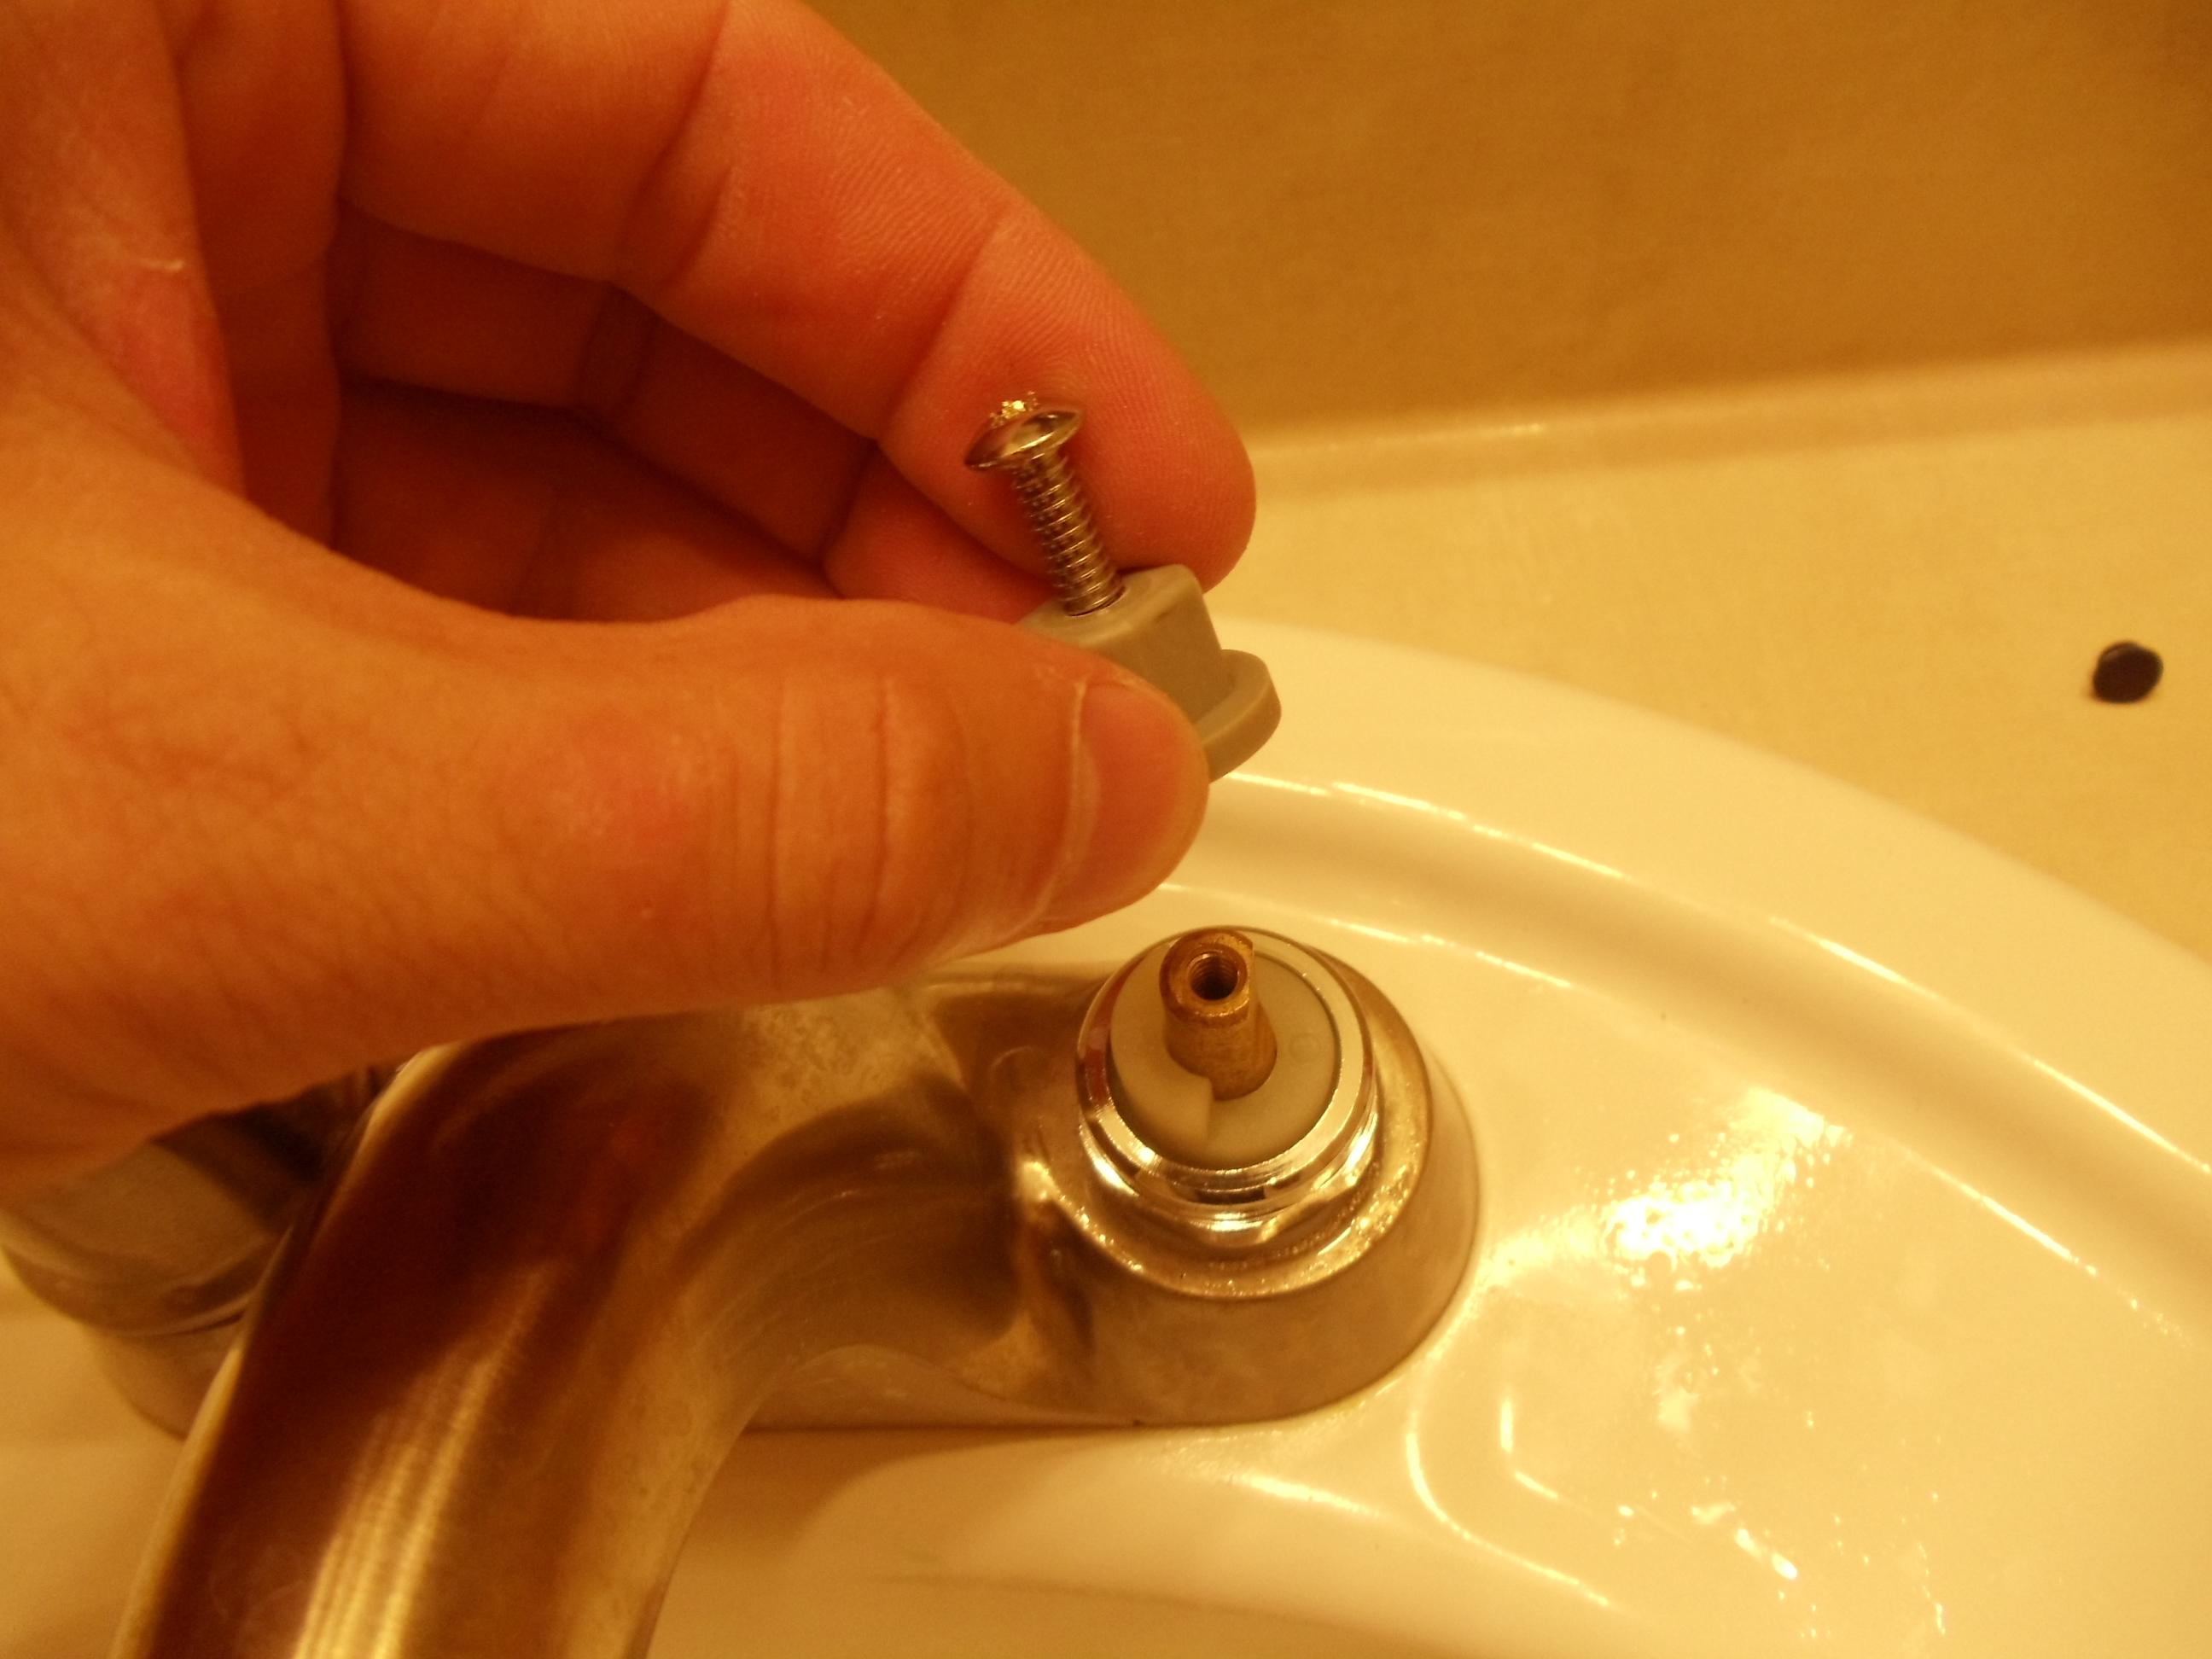 Glacier Bay Bathroom Faucet Cartridge, Replacing Cartridge In Bathtub Faucet